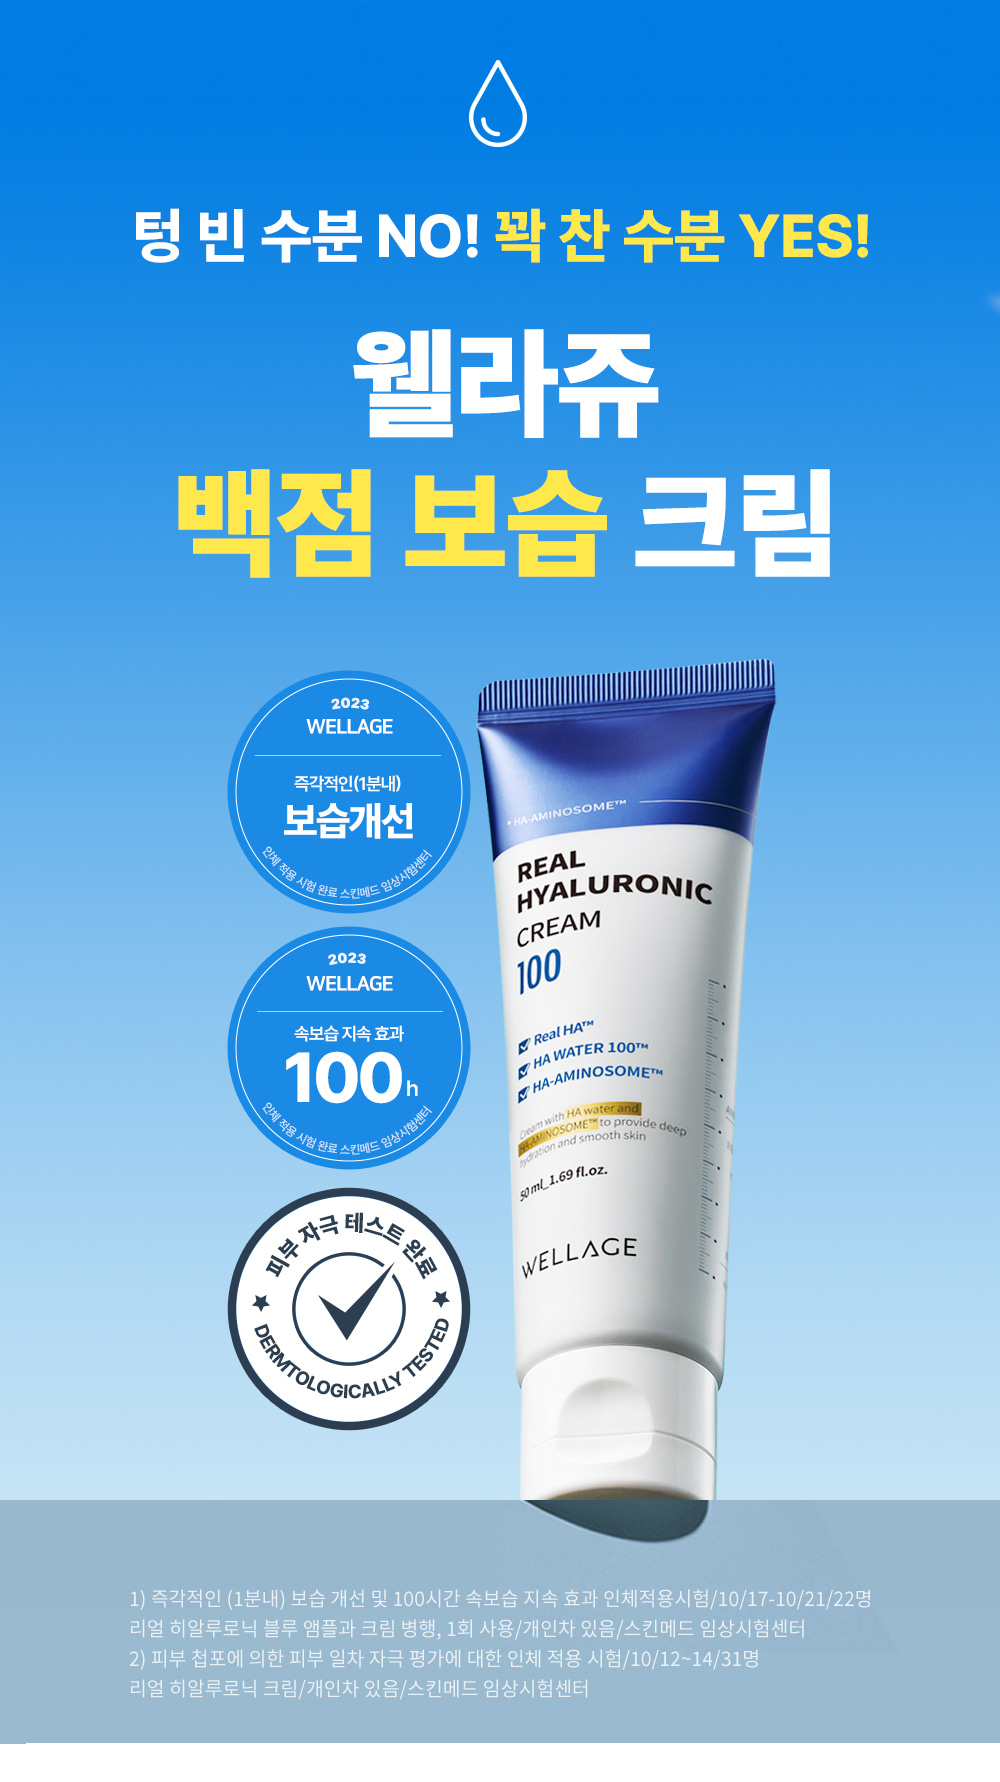 Kem dưỡng ẩm Wellage Real Hyealuronic Cream 50ml